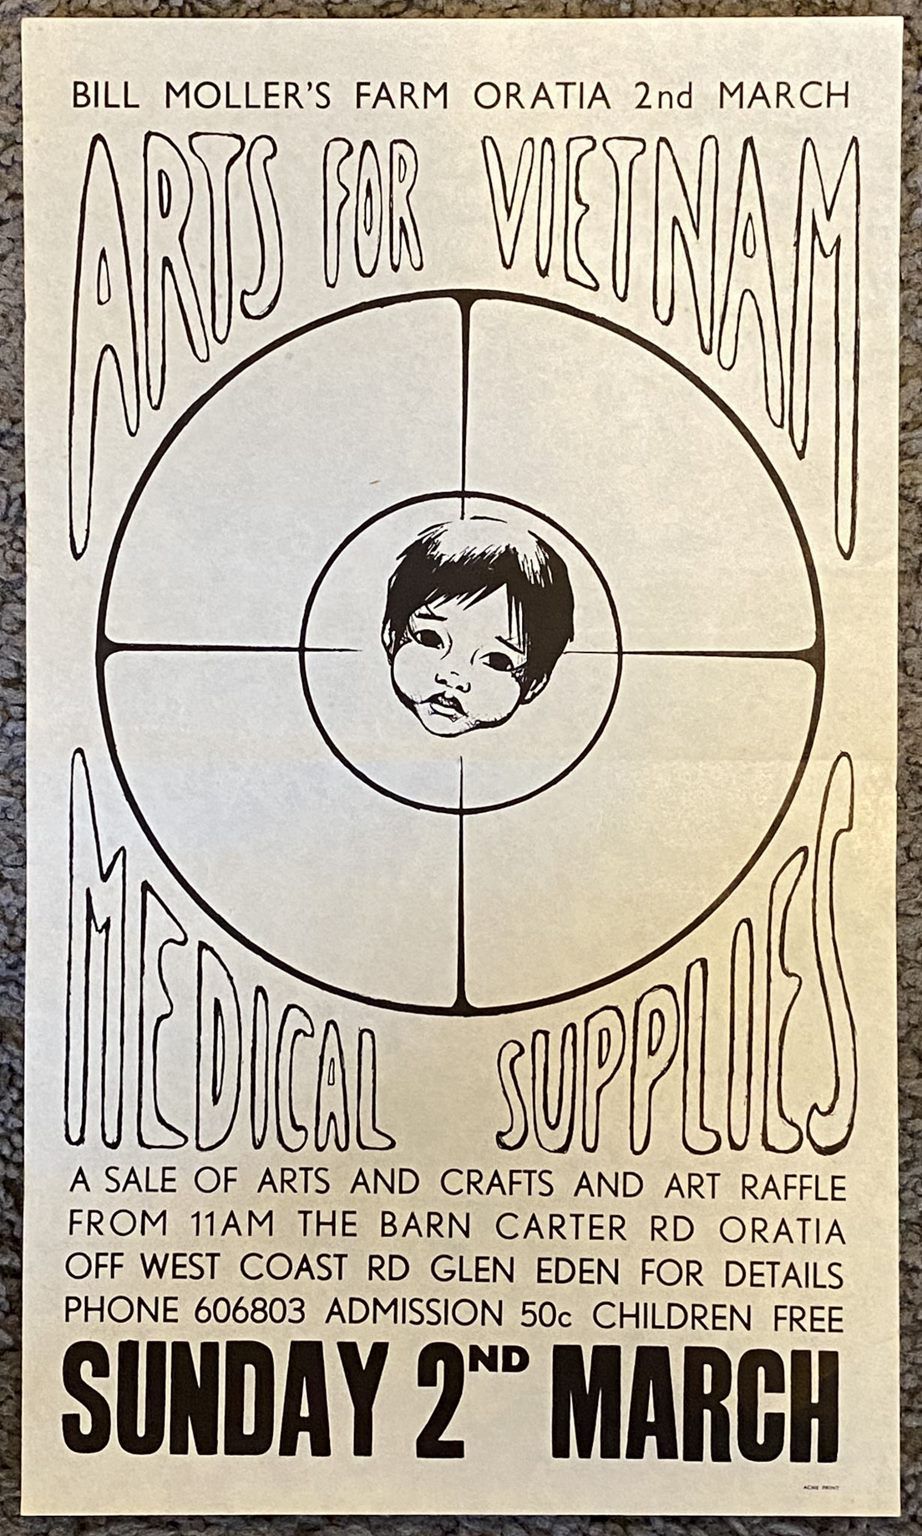 VINTAGE POSTER: Arts for Vietnam Medical Supplies fundraiser - Vietnam War 1960s